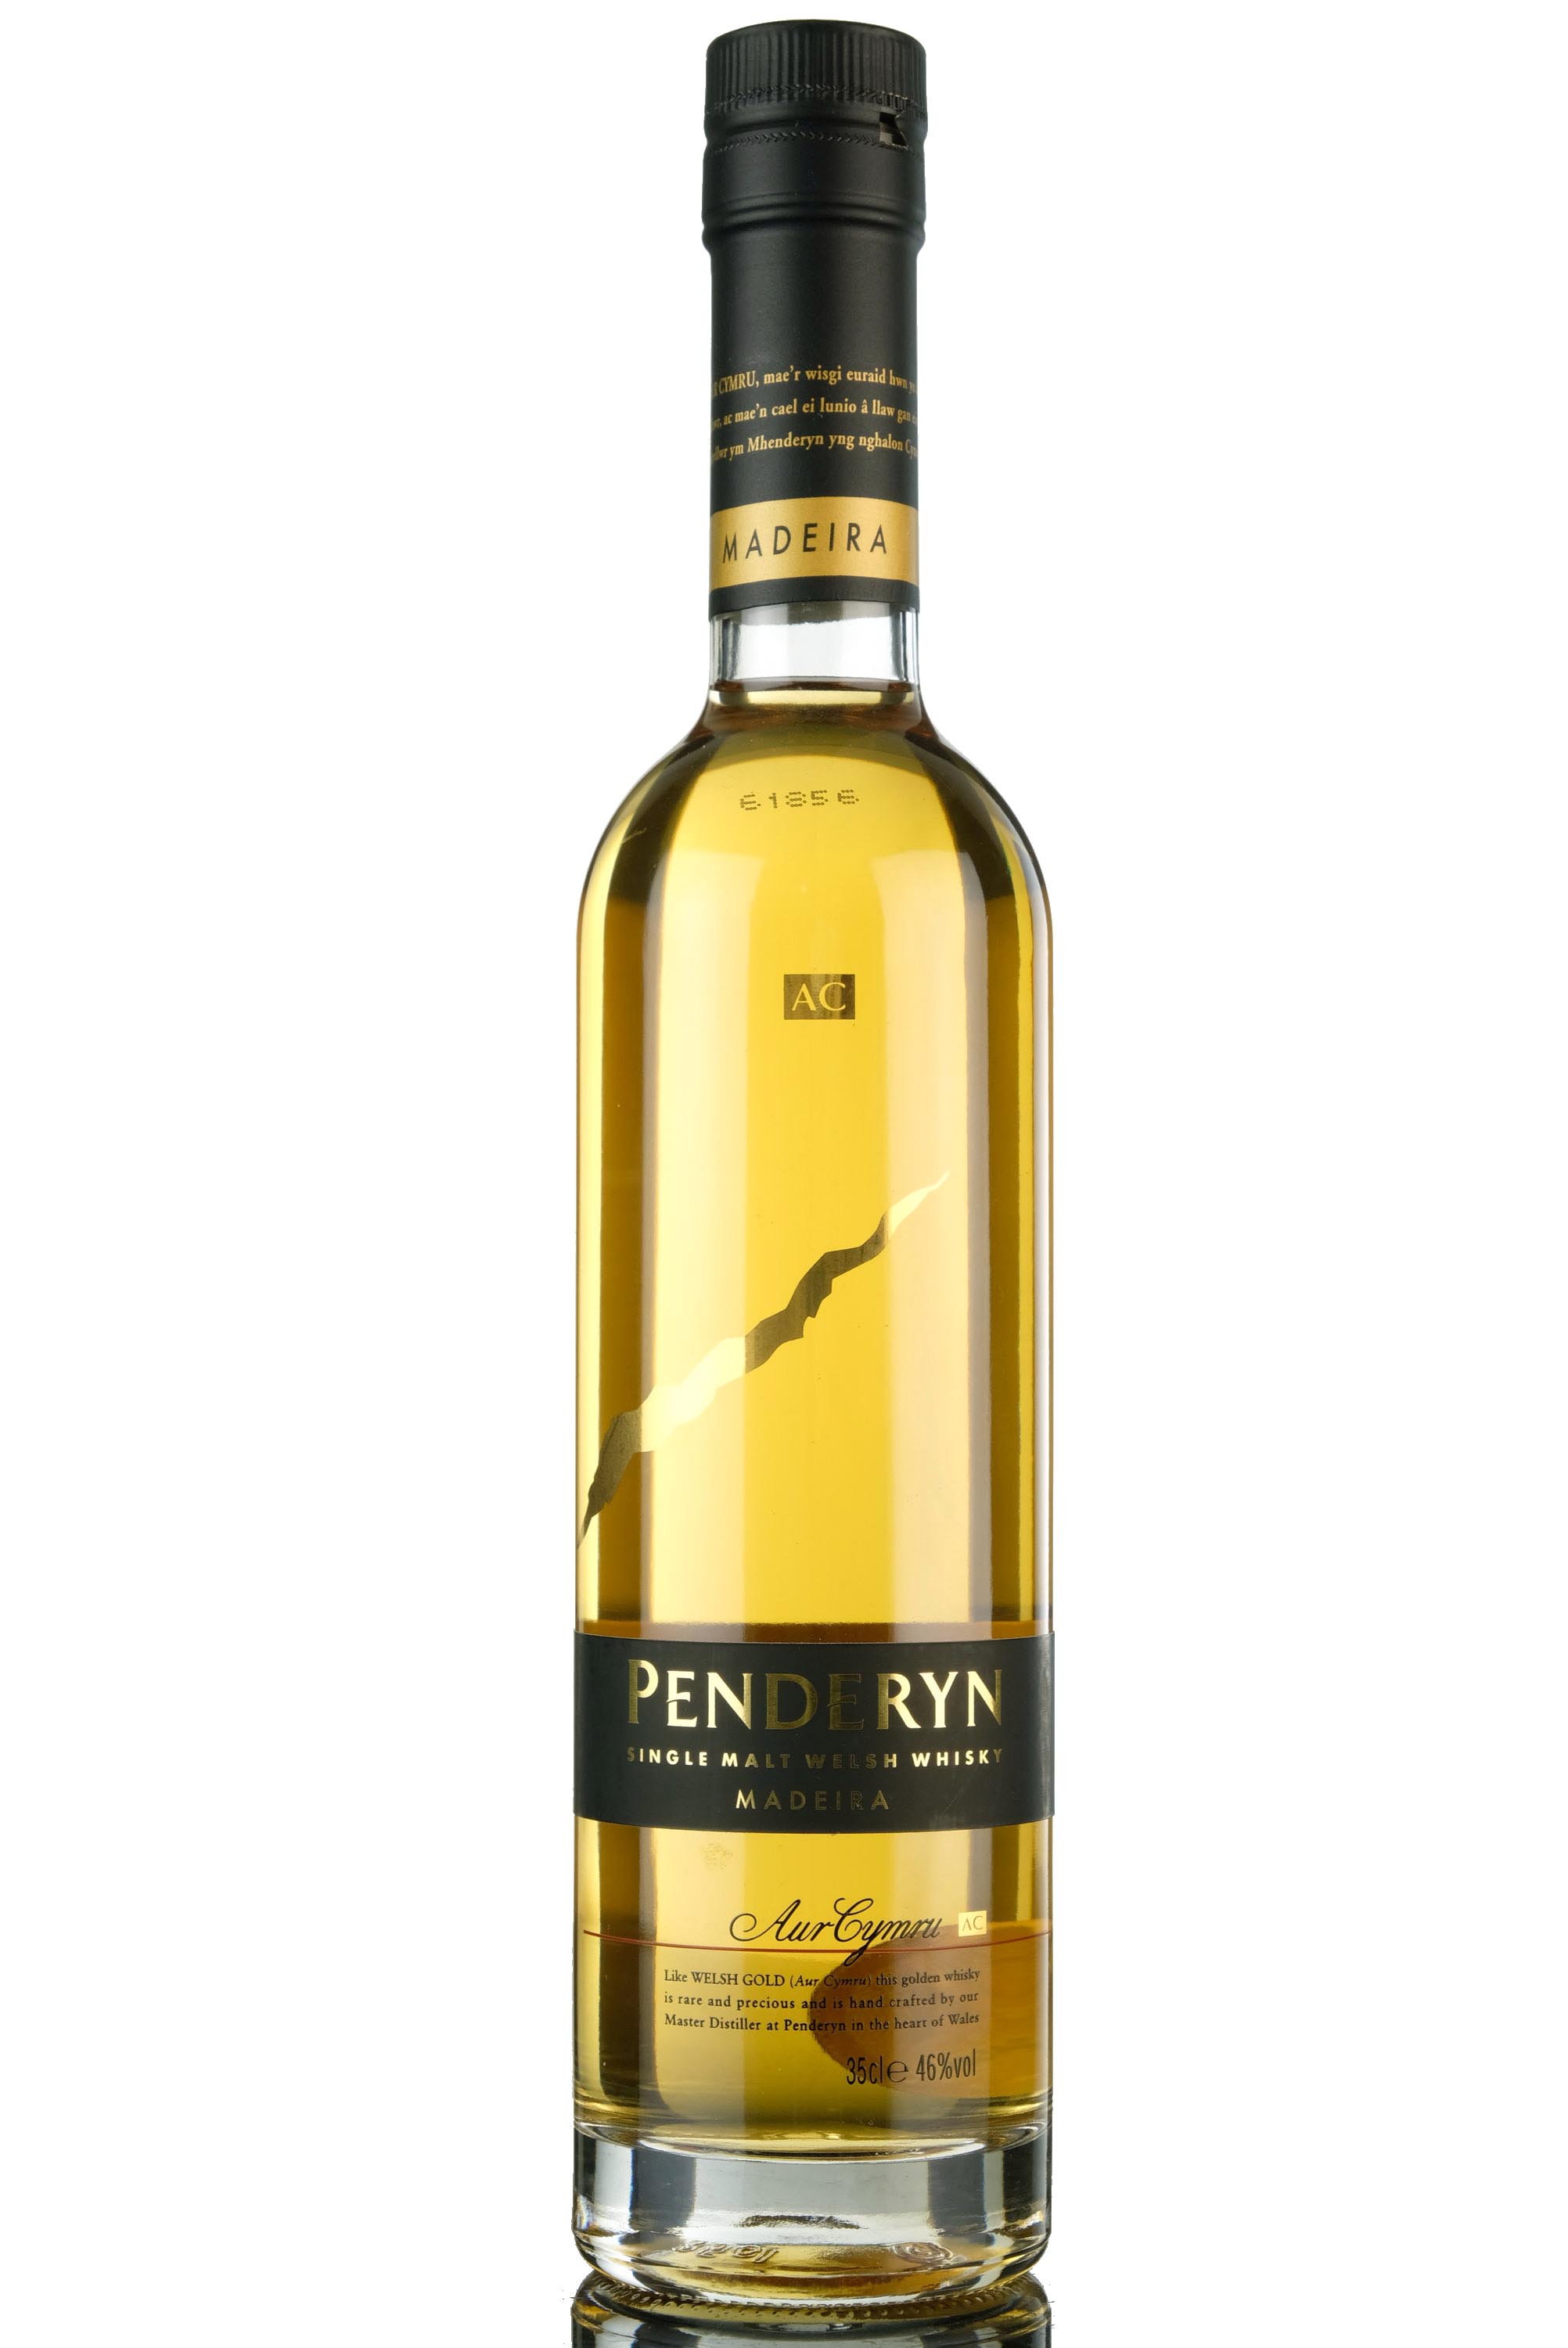 Penderyn Aur Cymru - Half Bottle